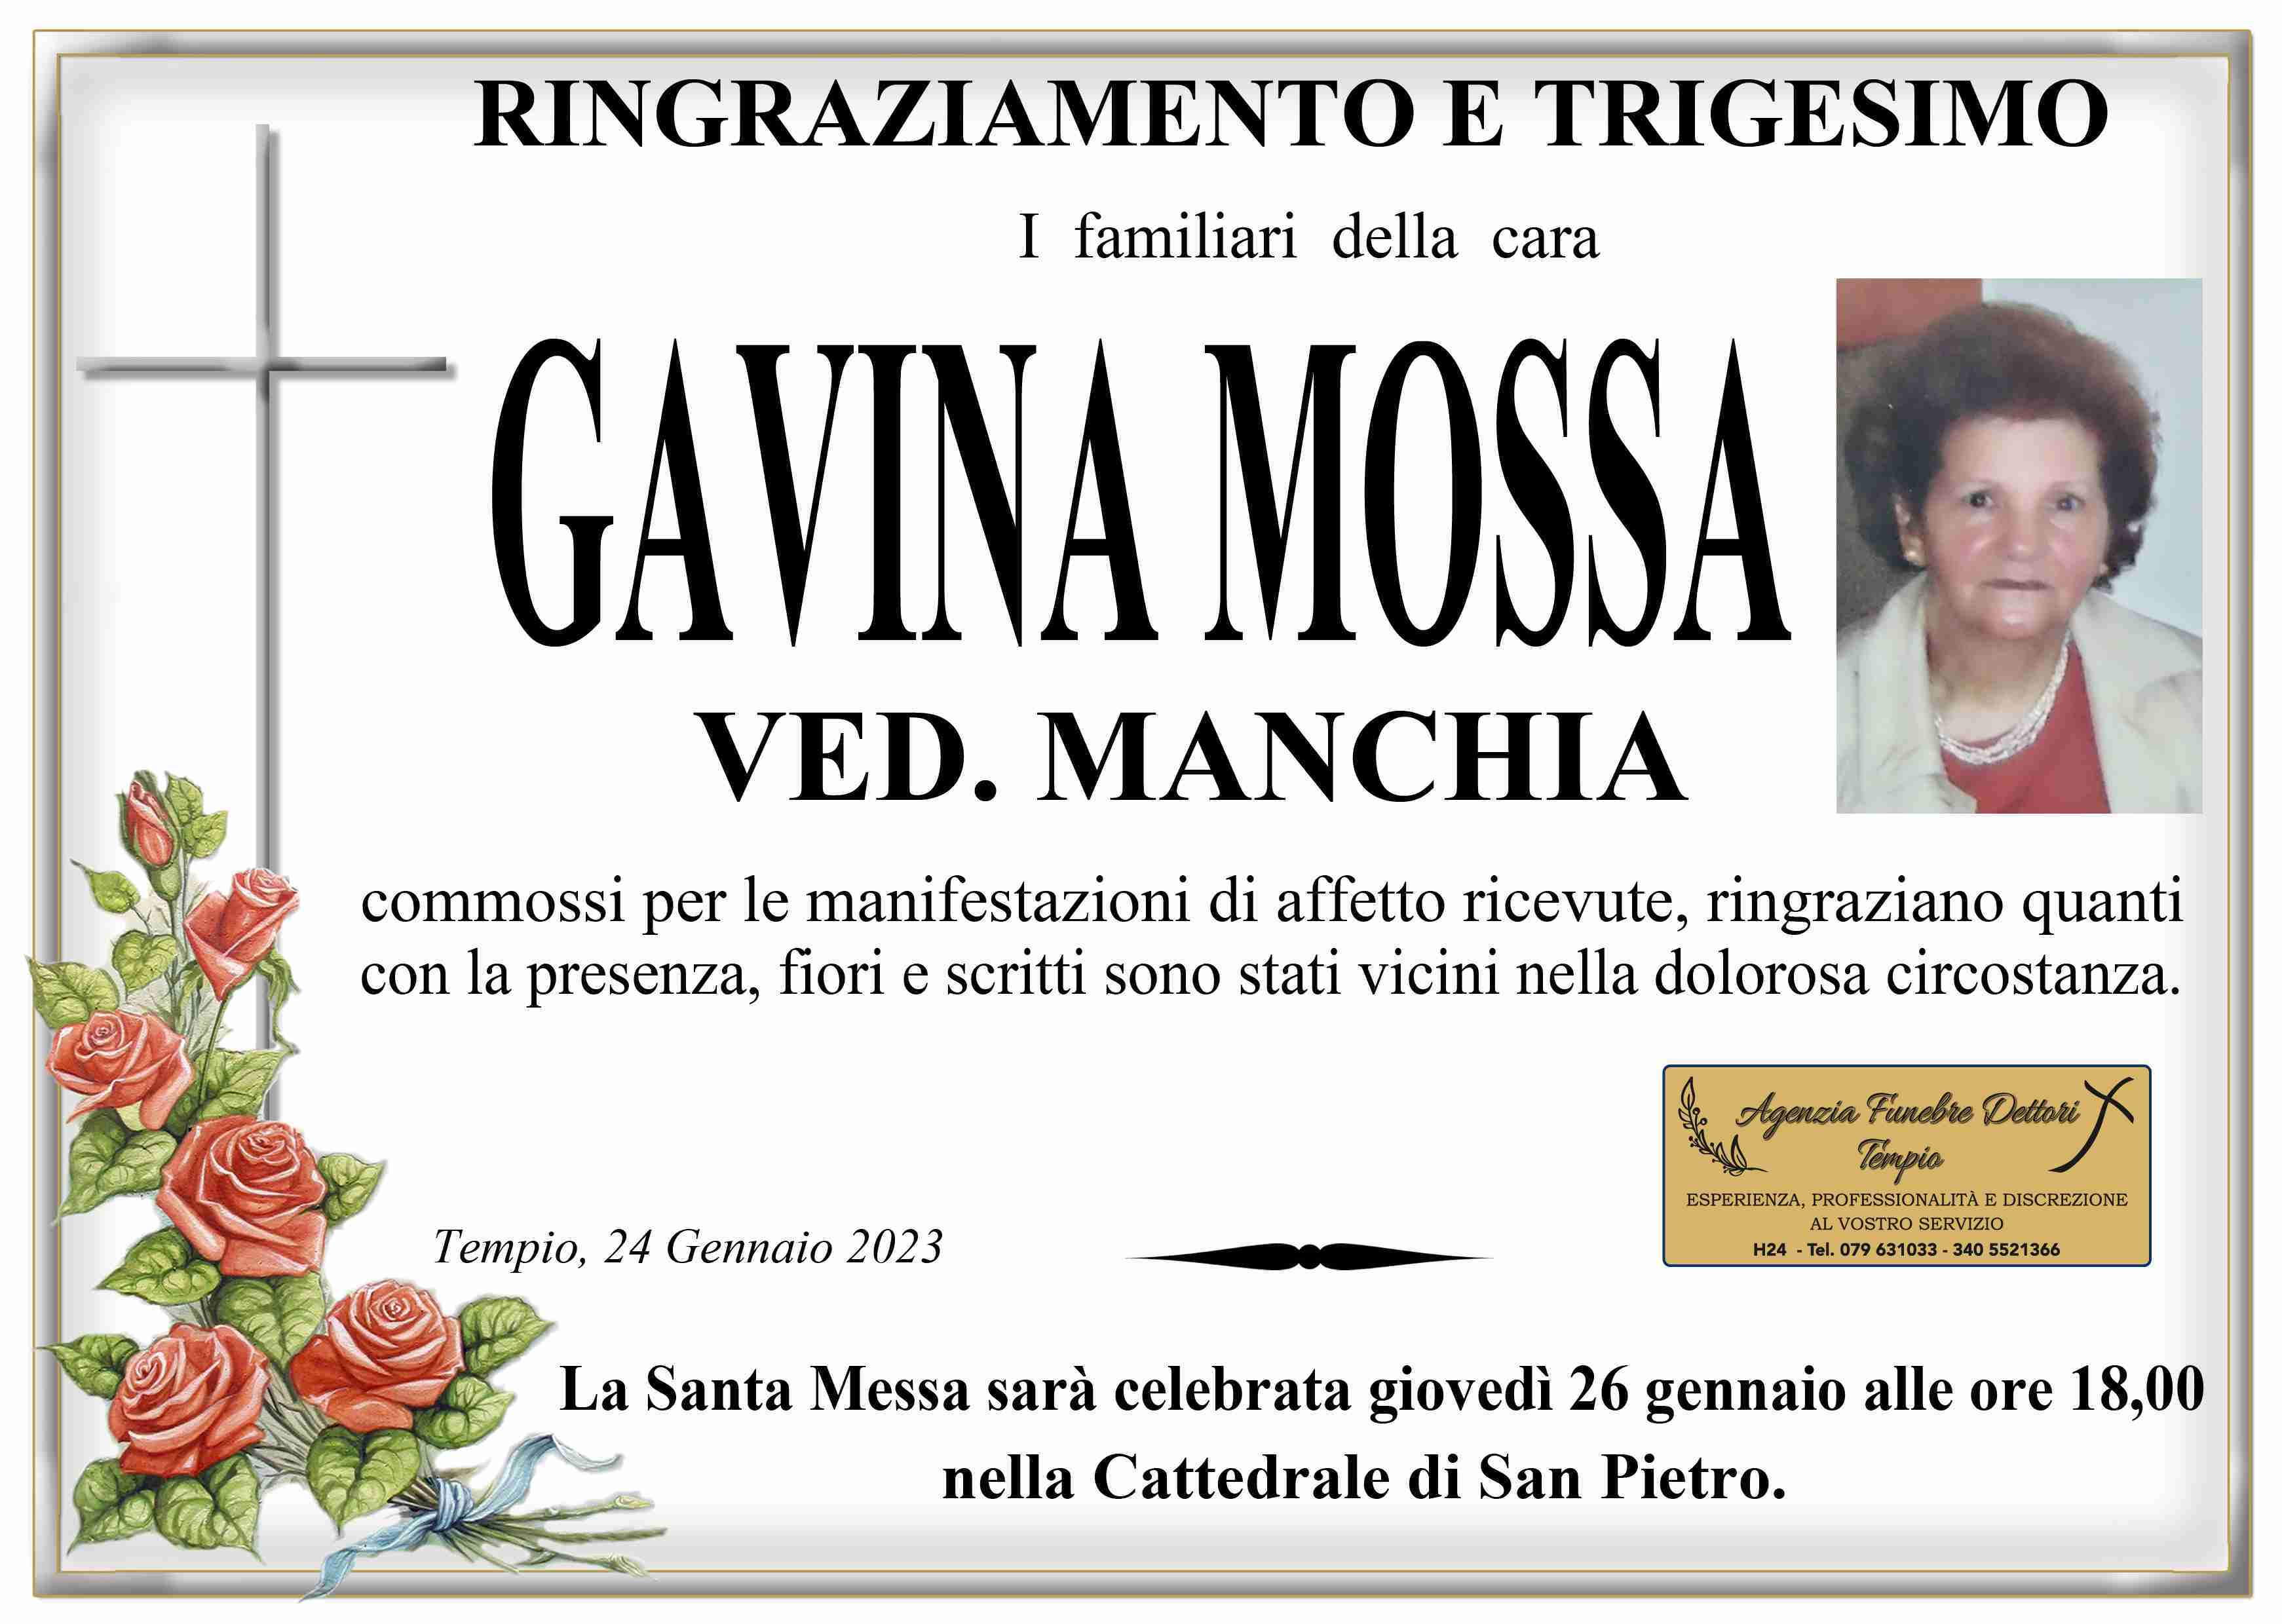 Gavina Mossa